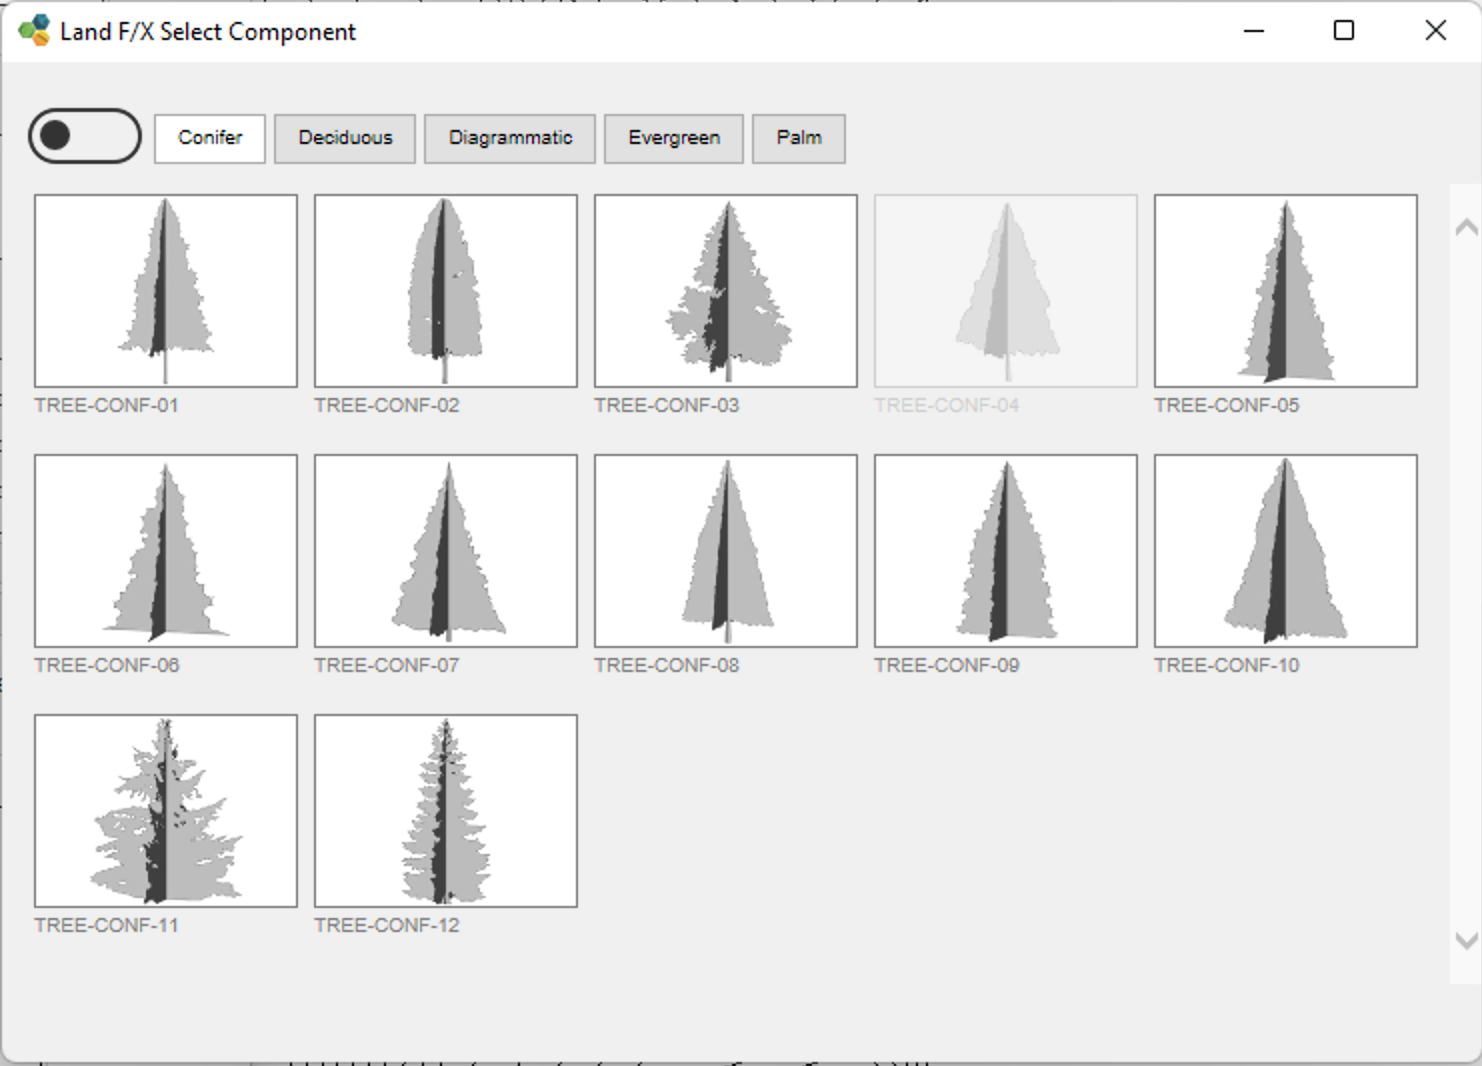 2D tree symbols, Conifer category shown